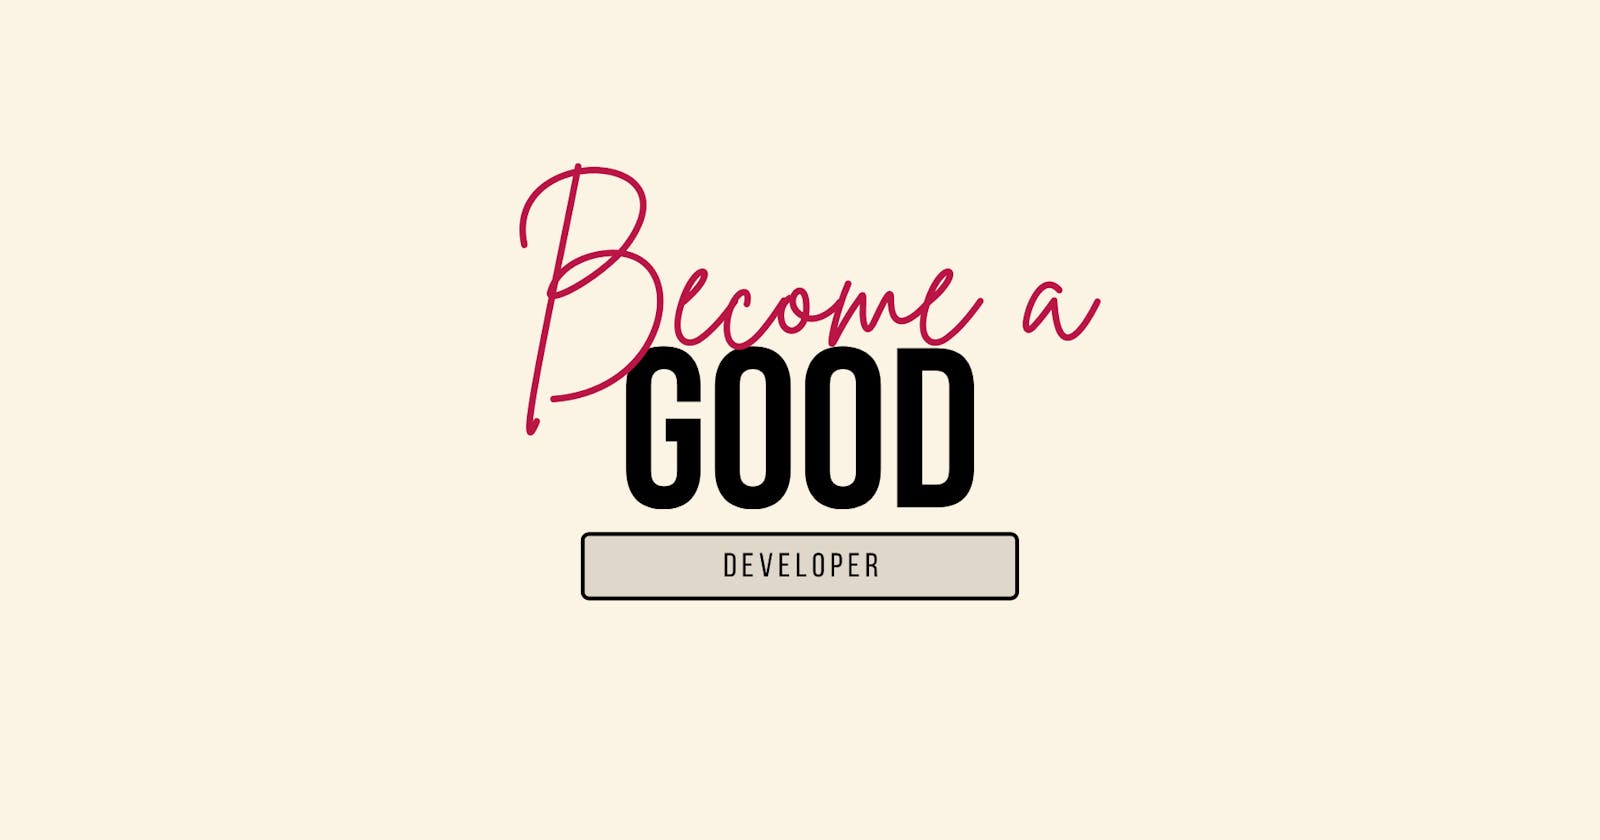 Become a good developer